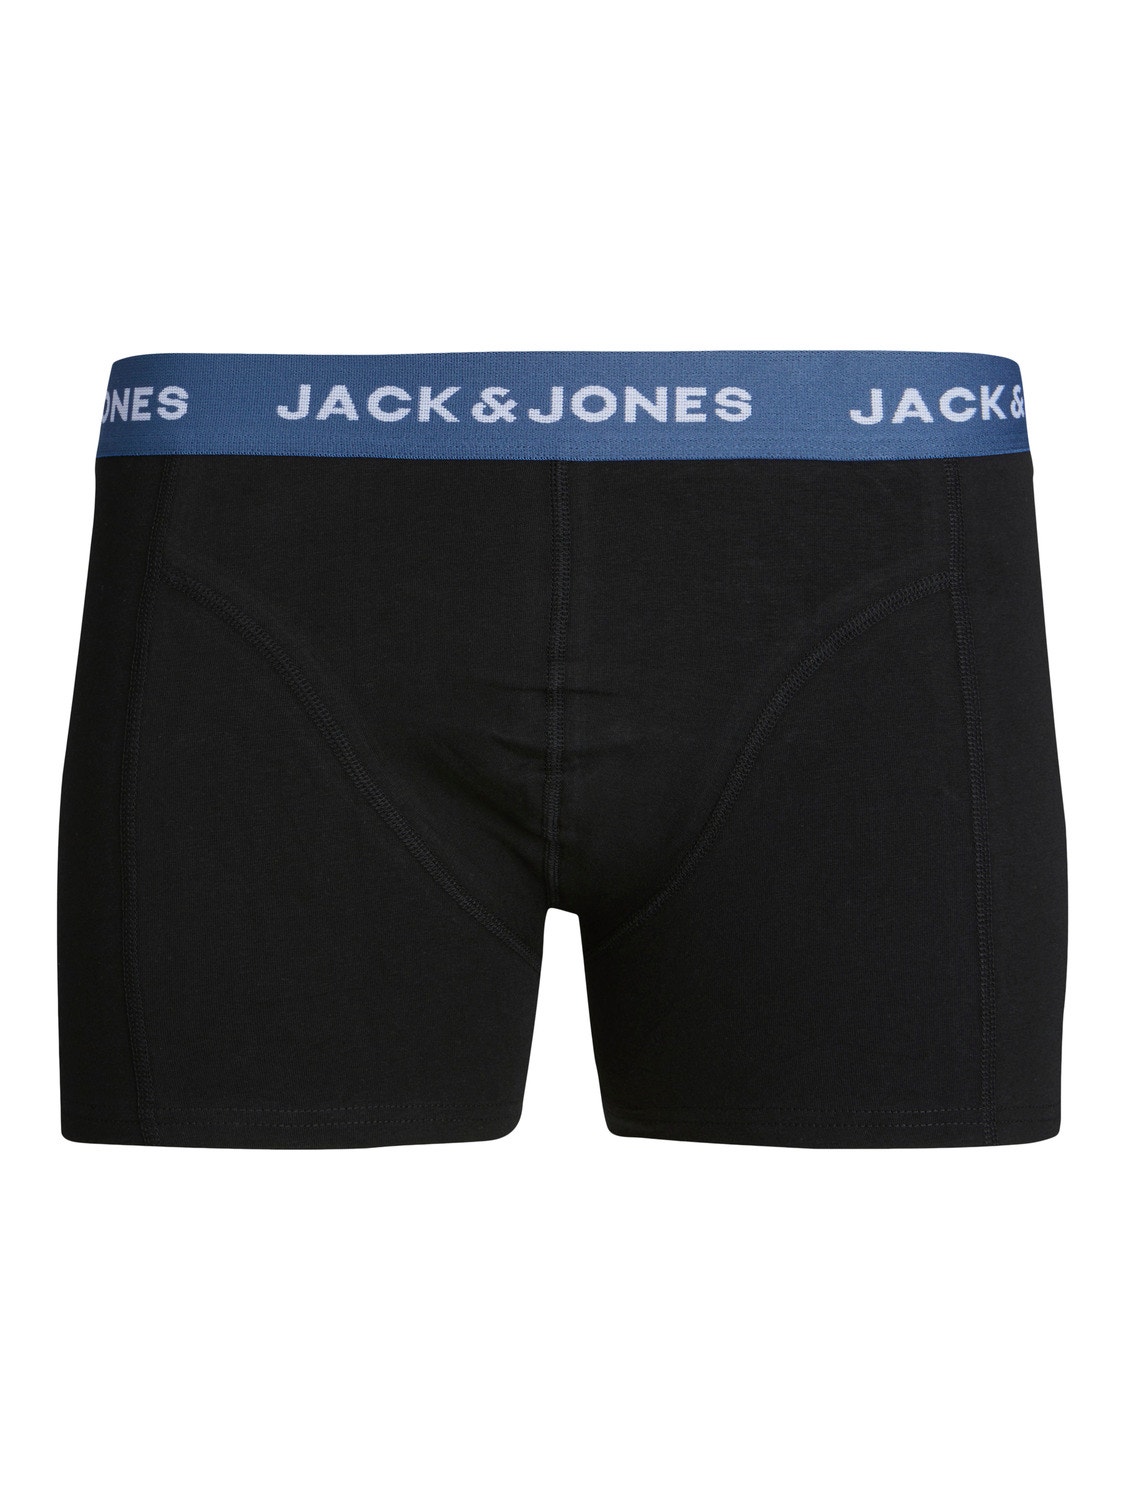 Jack & Jones Plus 3 Trunks -Dark Green - 12259899